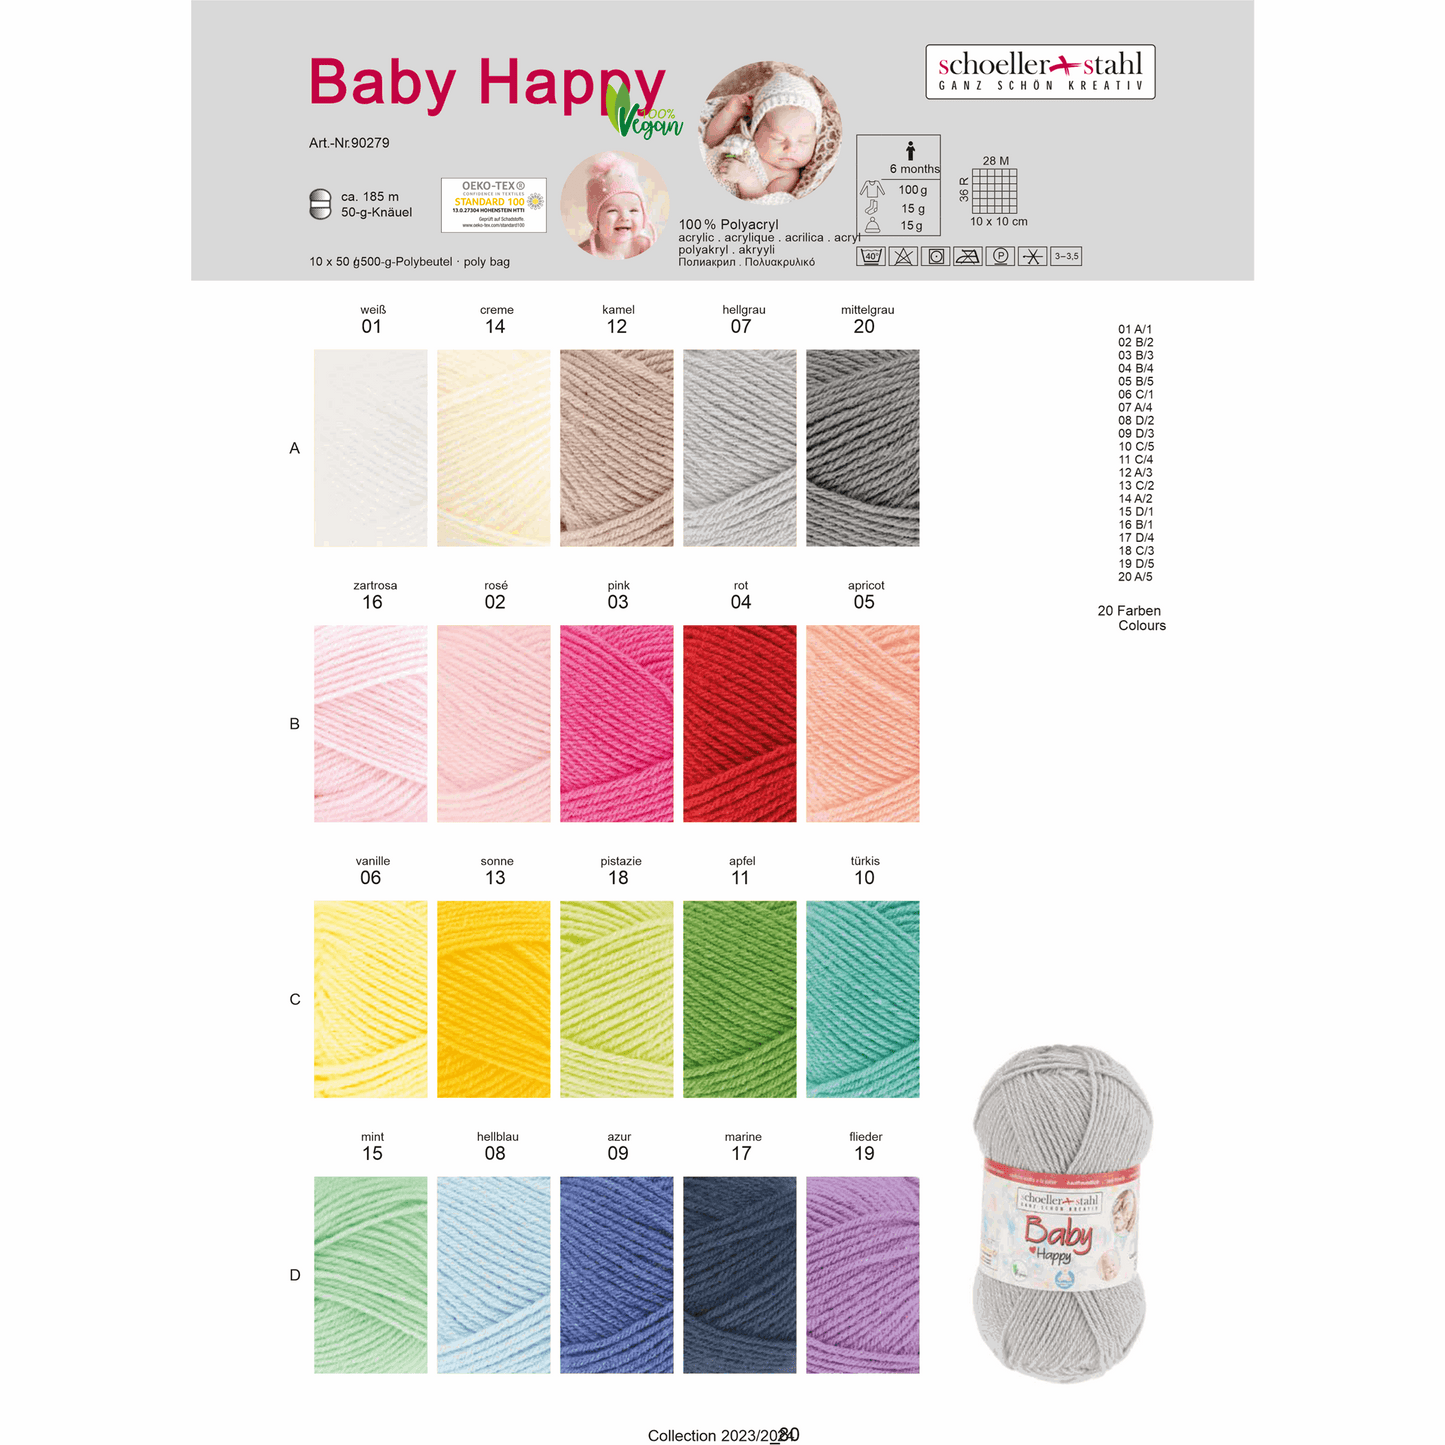 Baby happy 50g, 90279, Farbe 1, weiß